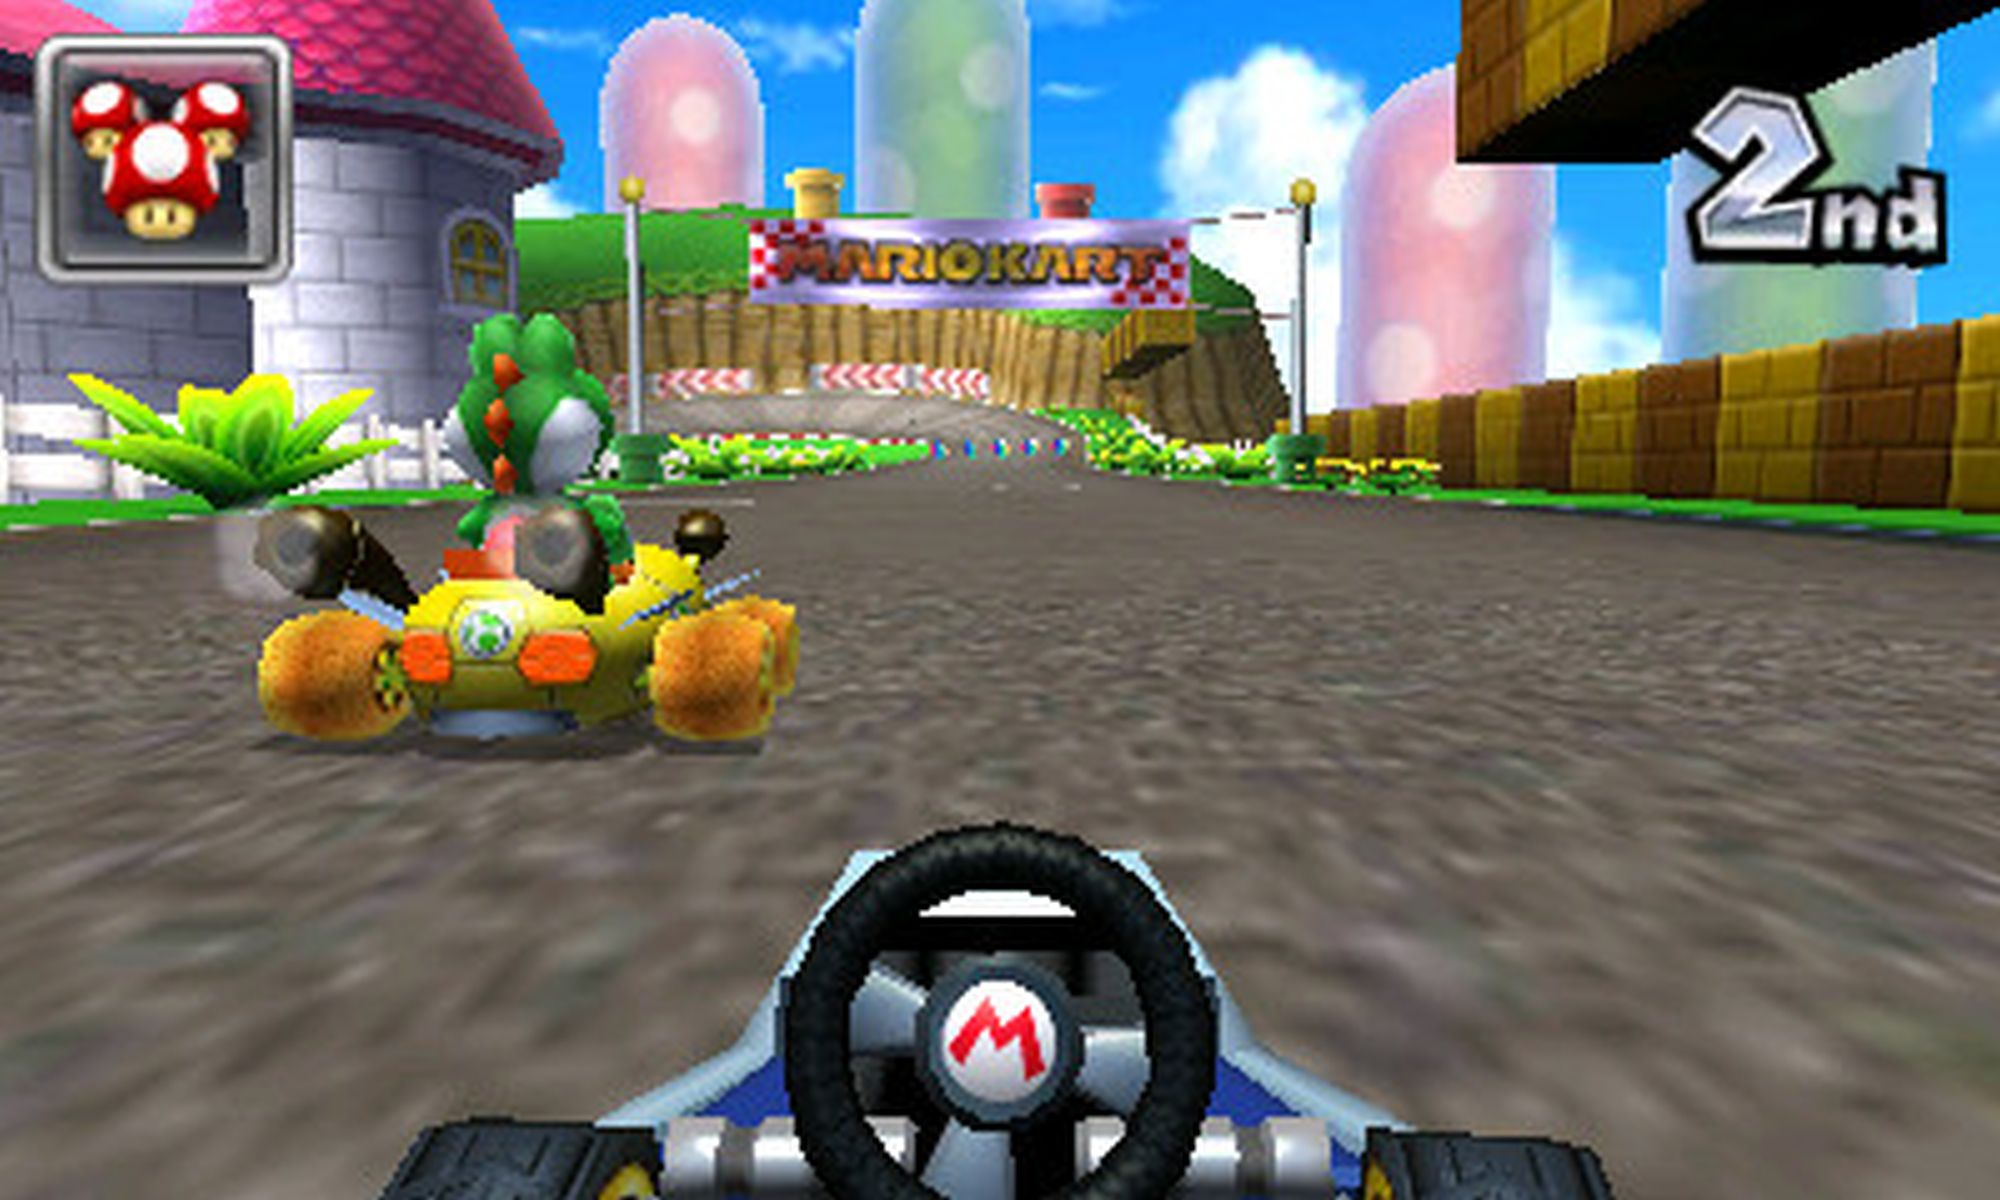 Mario Kart 7 [Nintendo DS] 